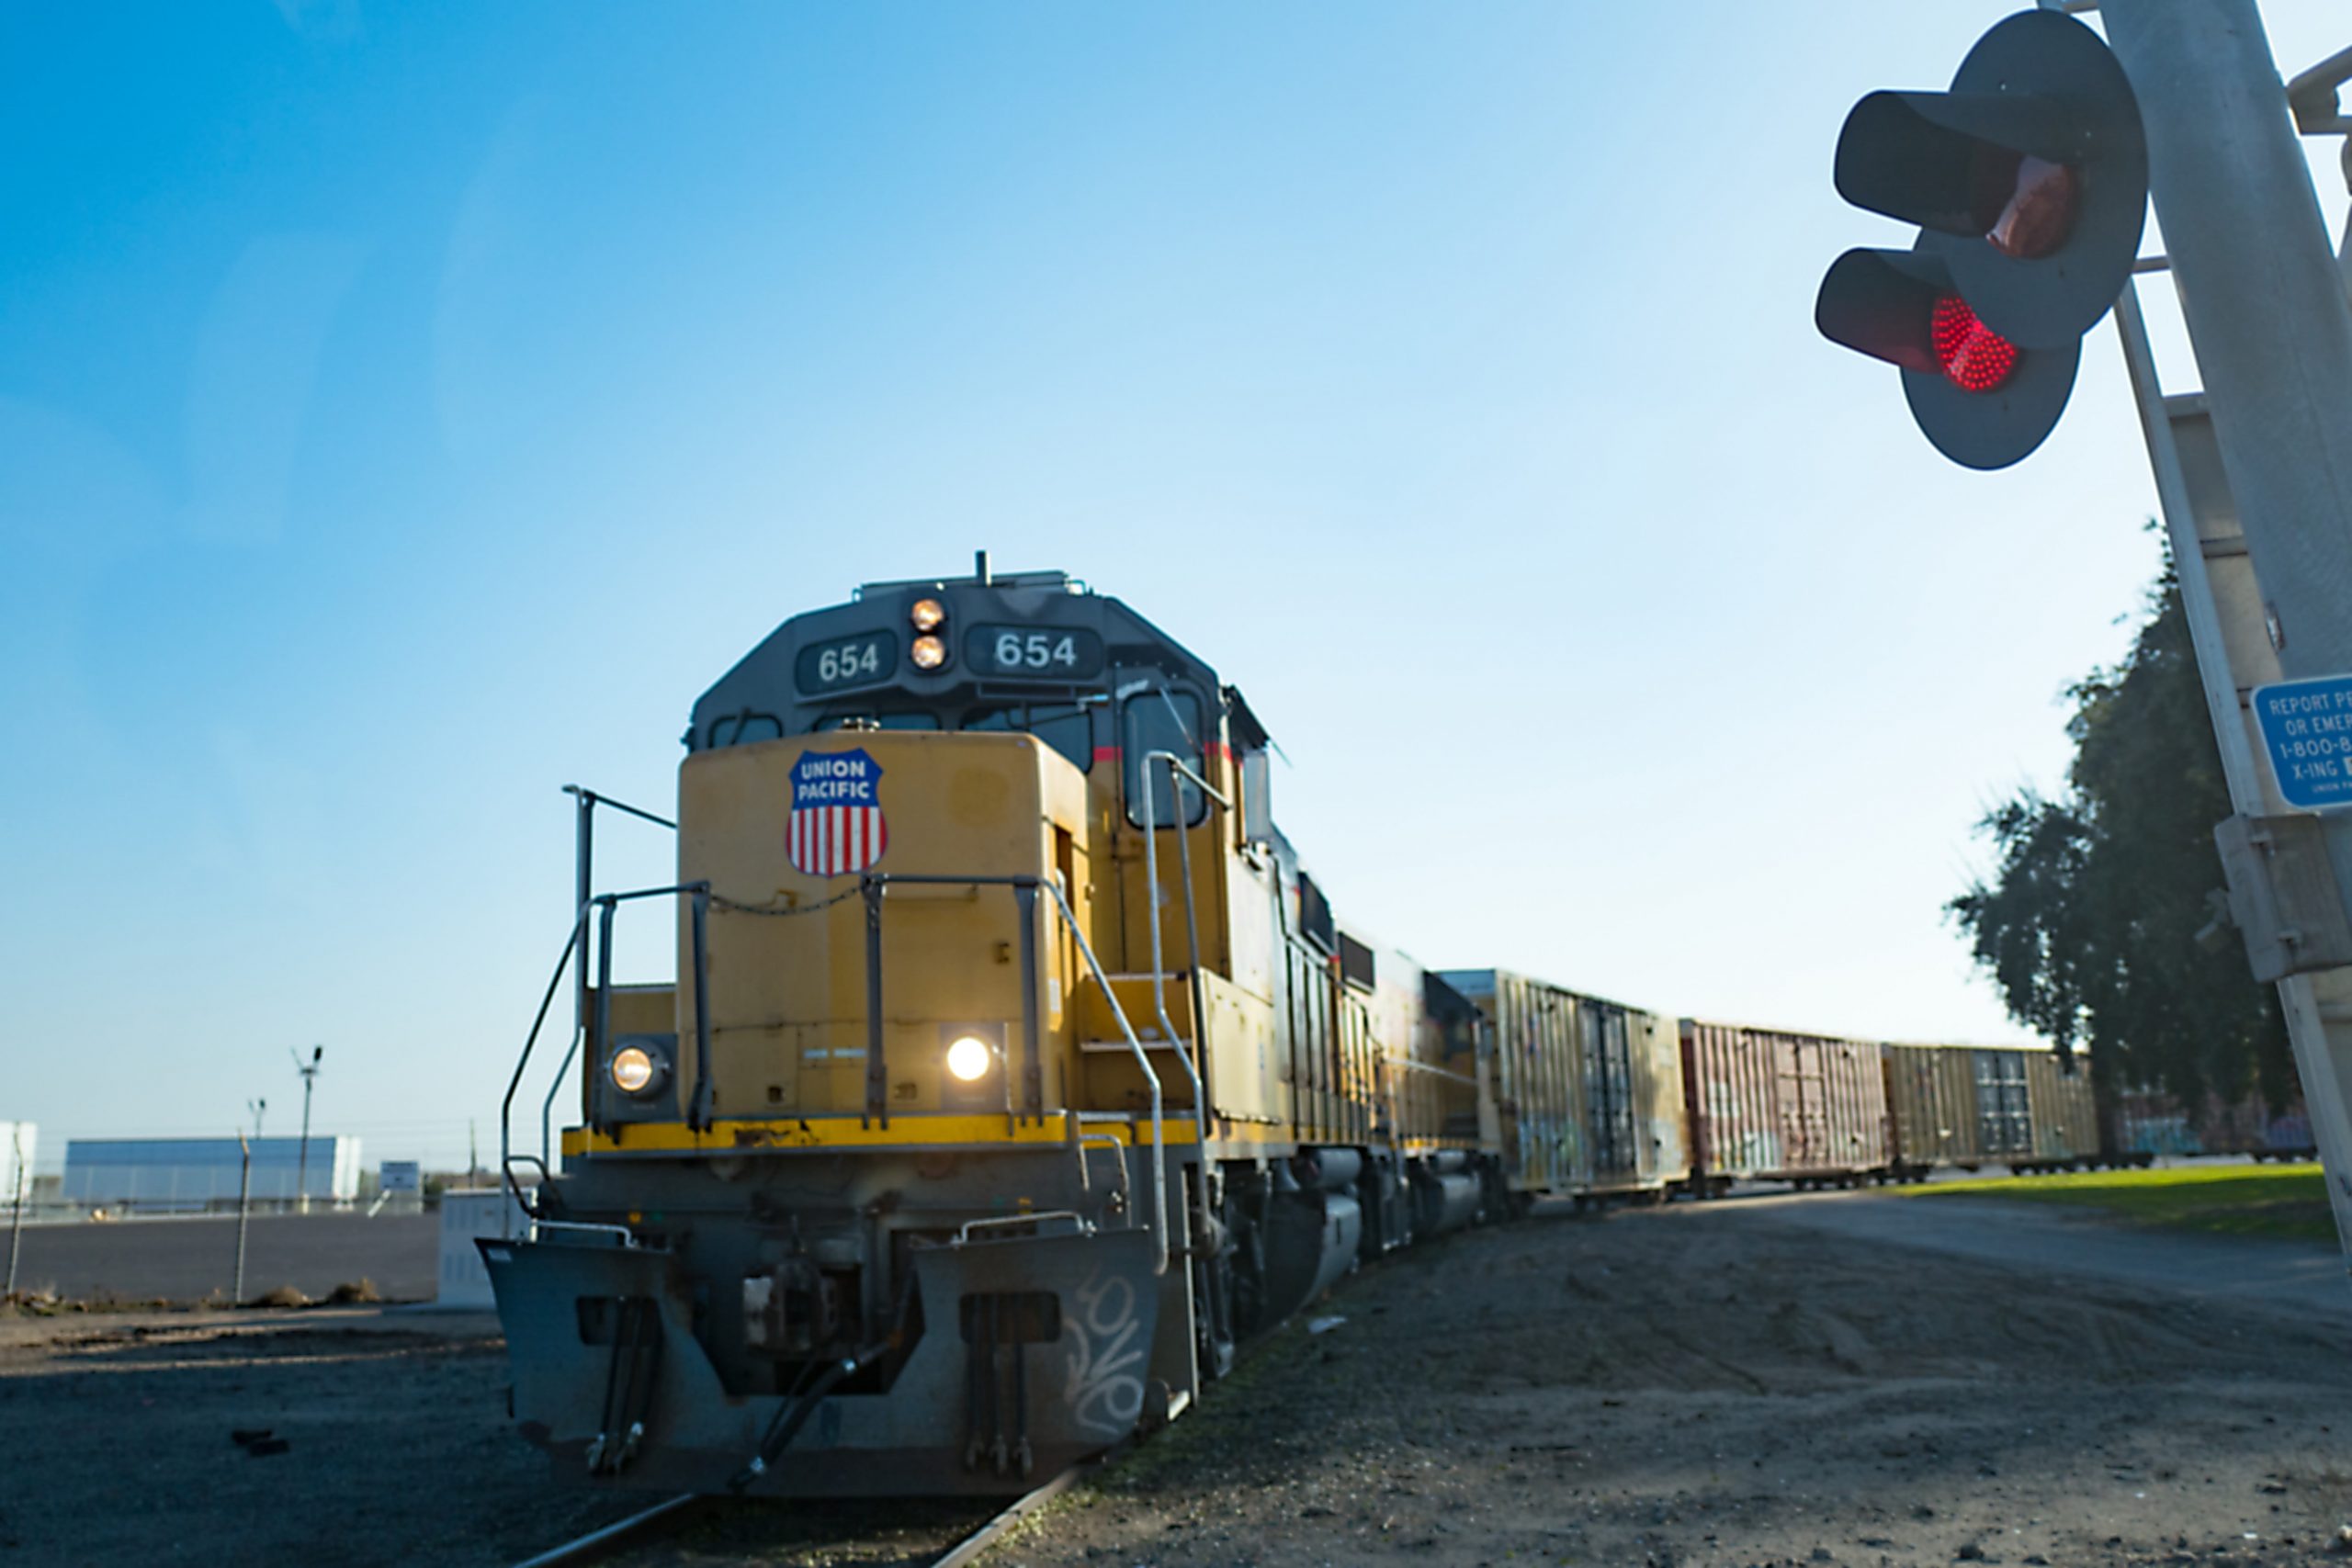 Jim Cramer makes a case for Union Pacific to amass Kansas Metropolis Southern